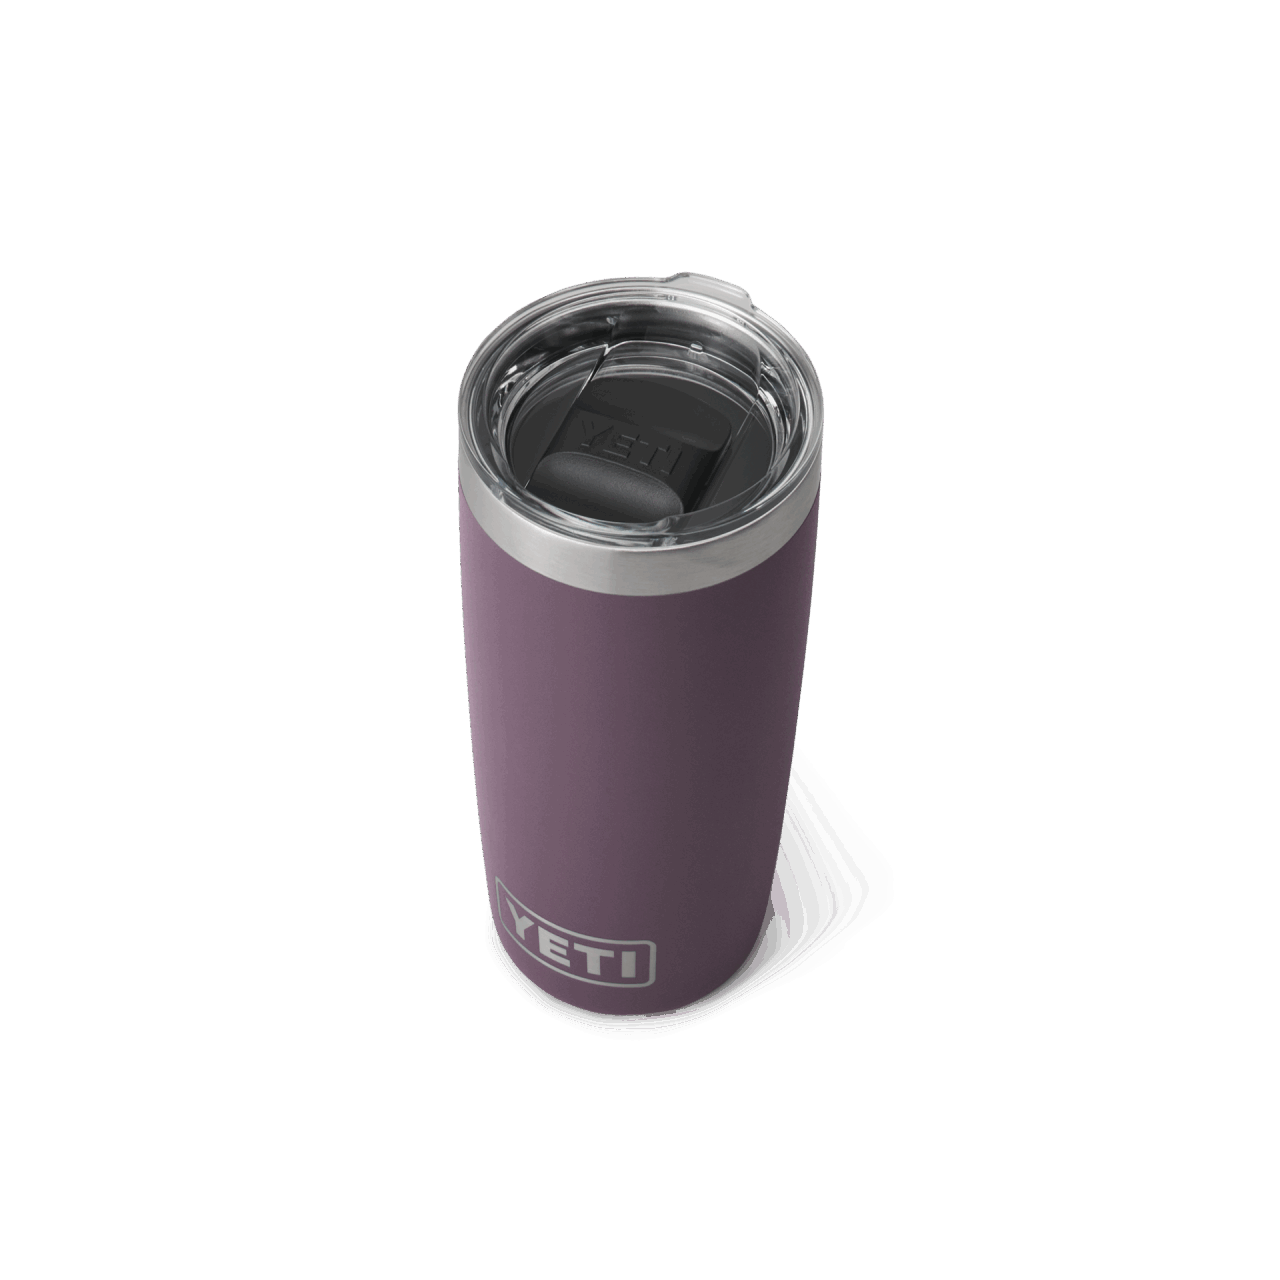 YETI Rambler 10 oz (300ml) - nordic purple